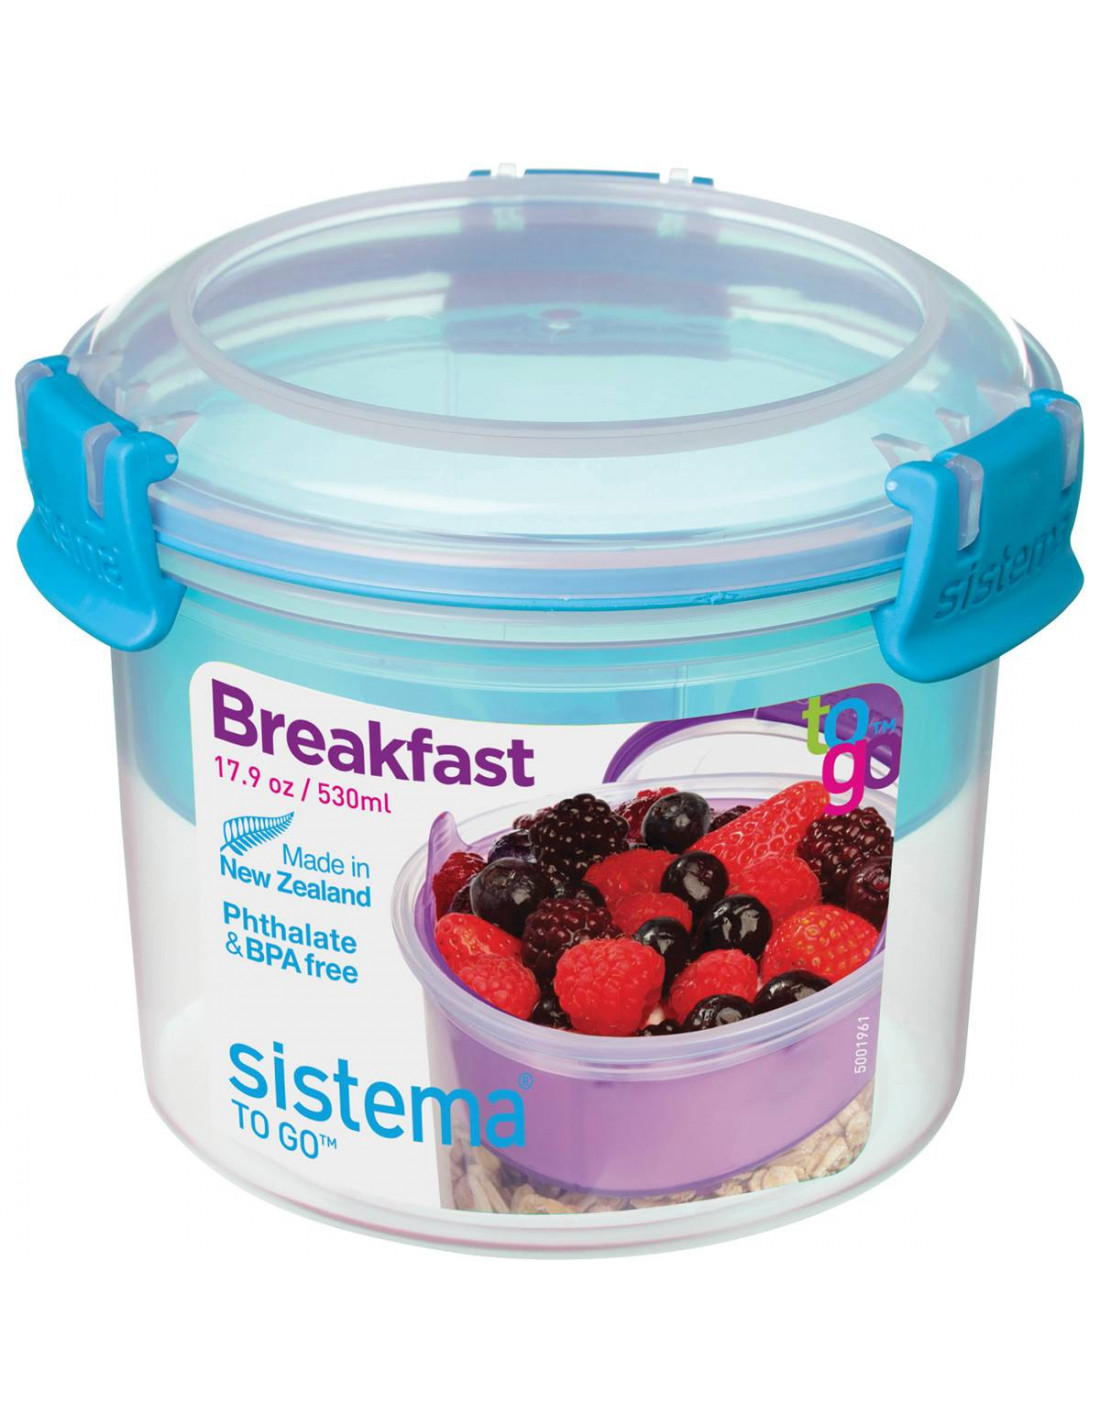 https://www.allysbasket.com/23126-thickbox_default/sistema-plasticware-breakfast-to-go-530ml-each.jpg